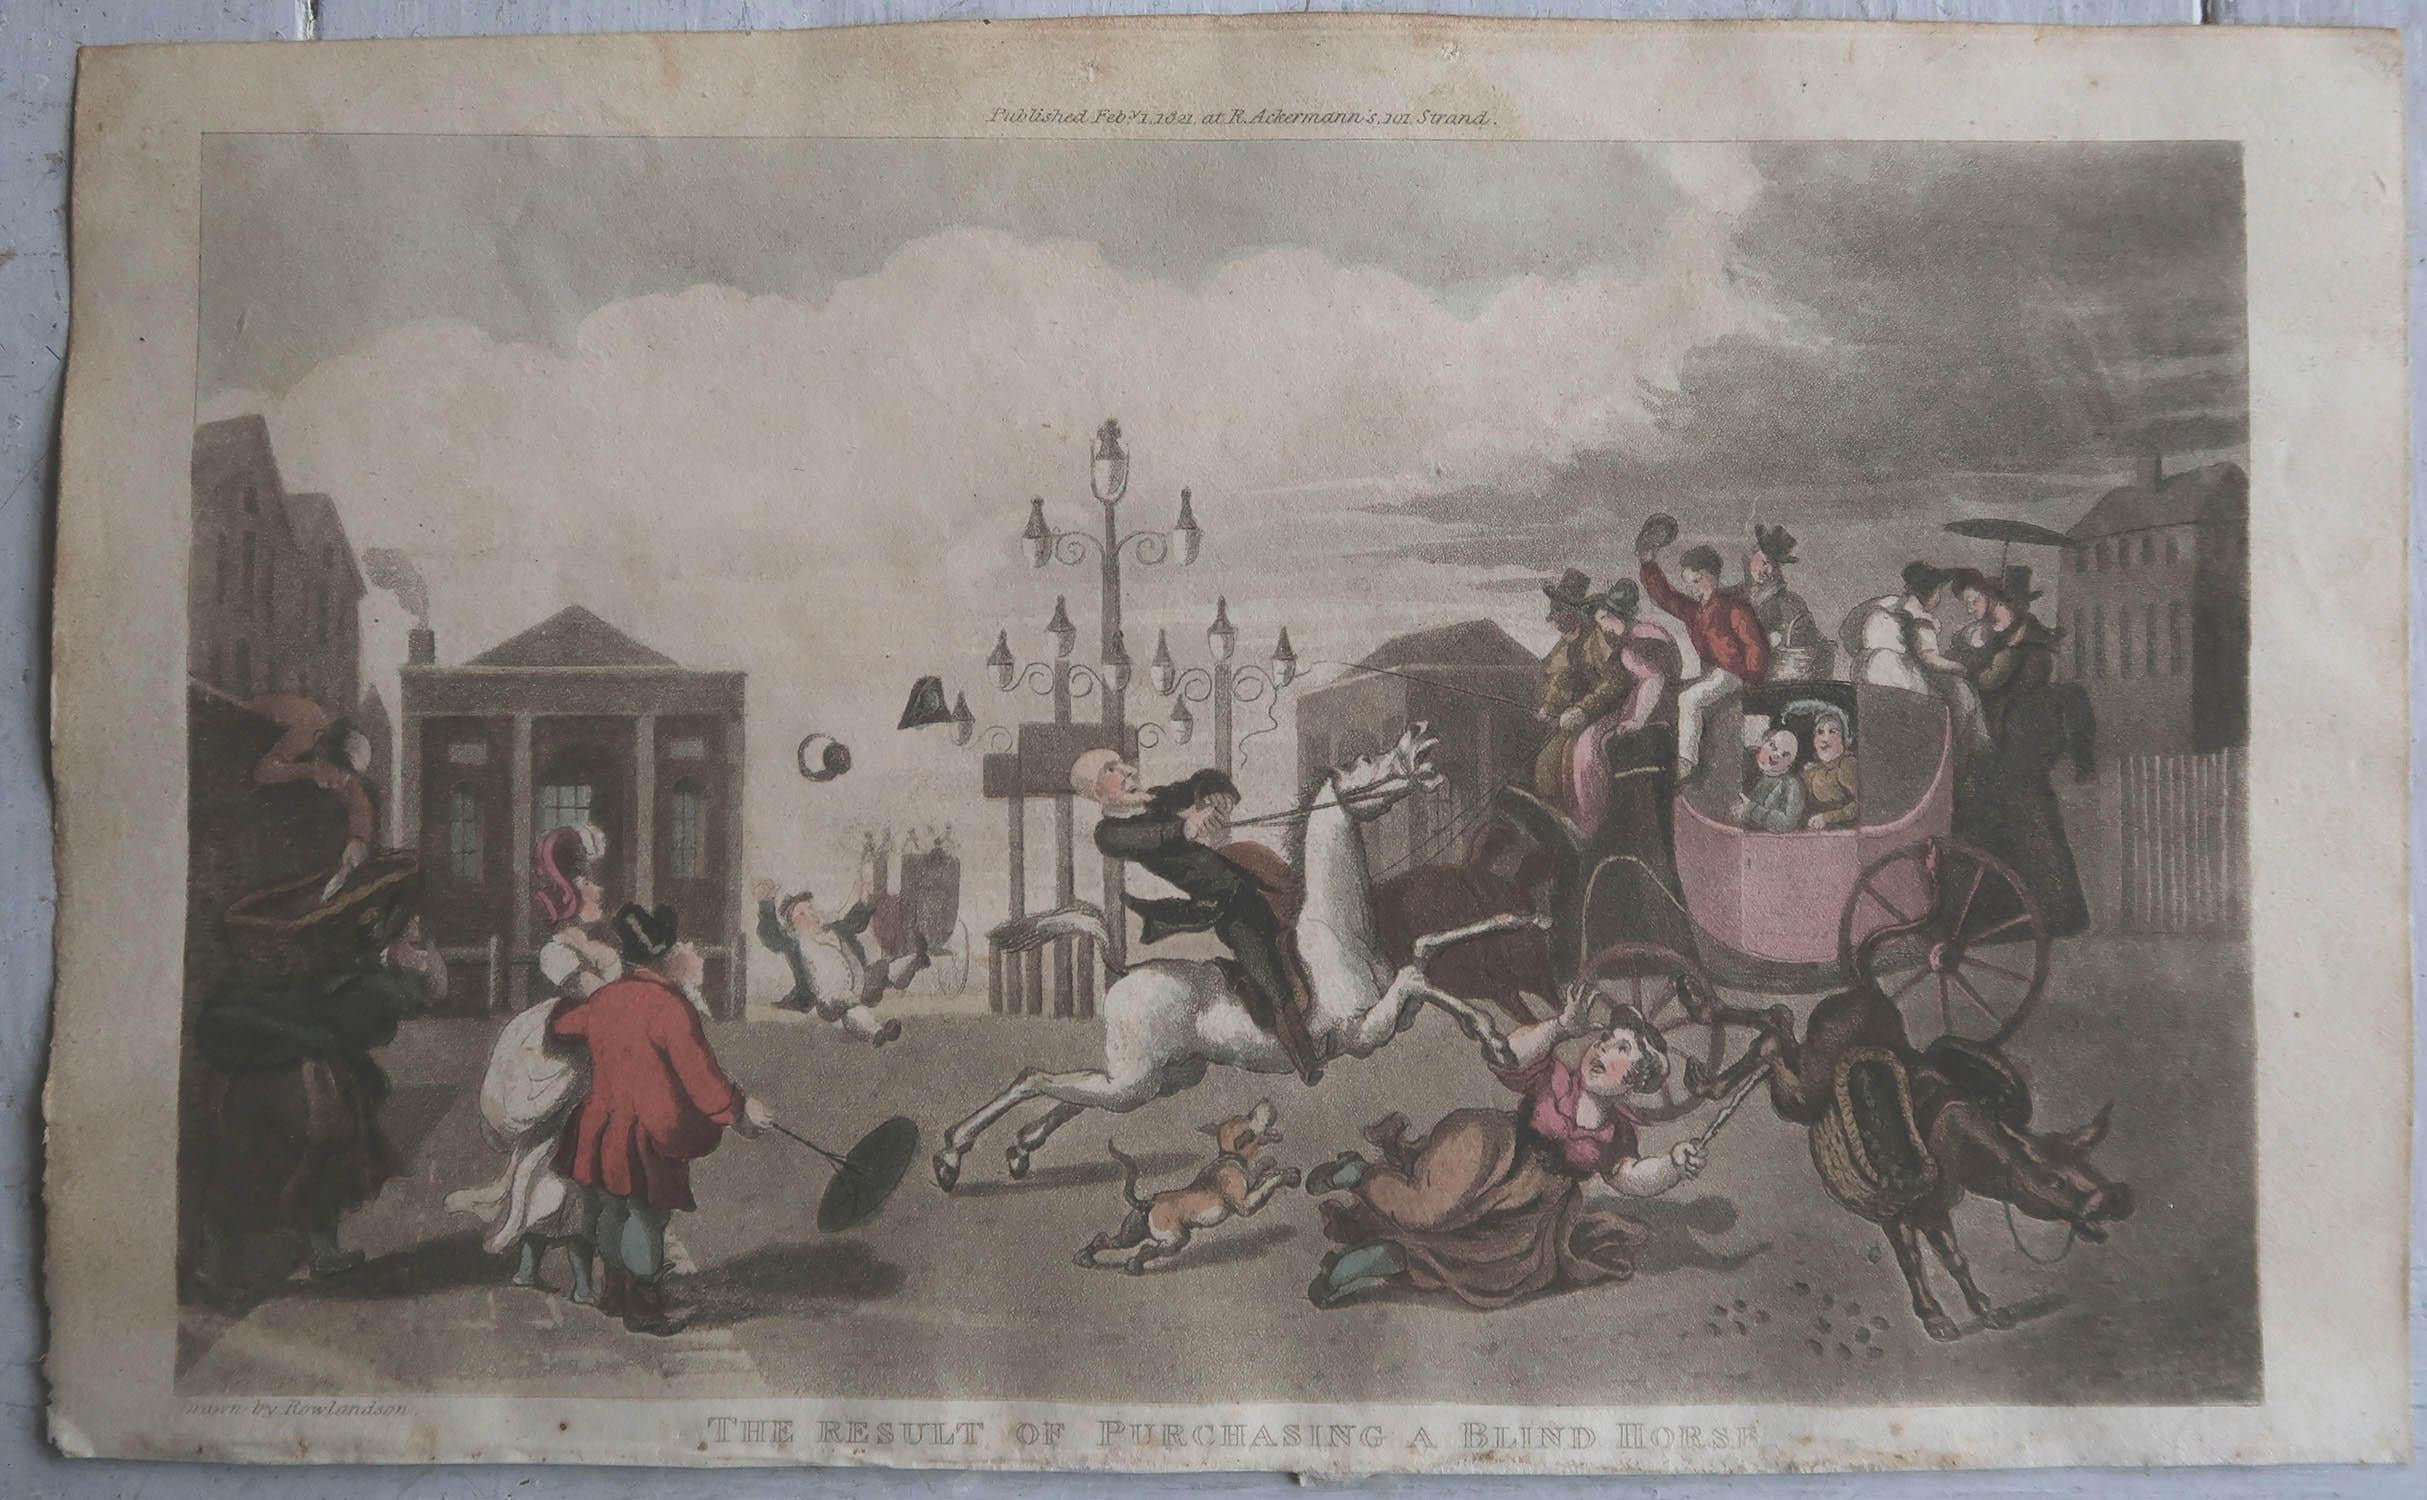 Georgian Original Antique Print After Thomas Rowlandson, Purchasing a Blind Horse, 1821 For Sale